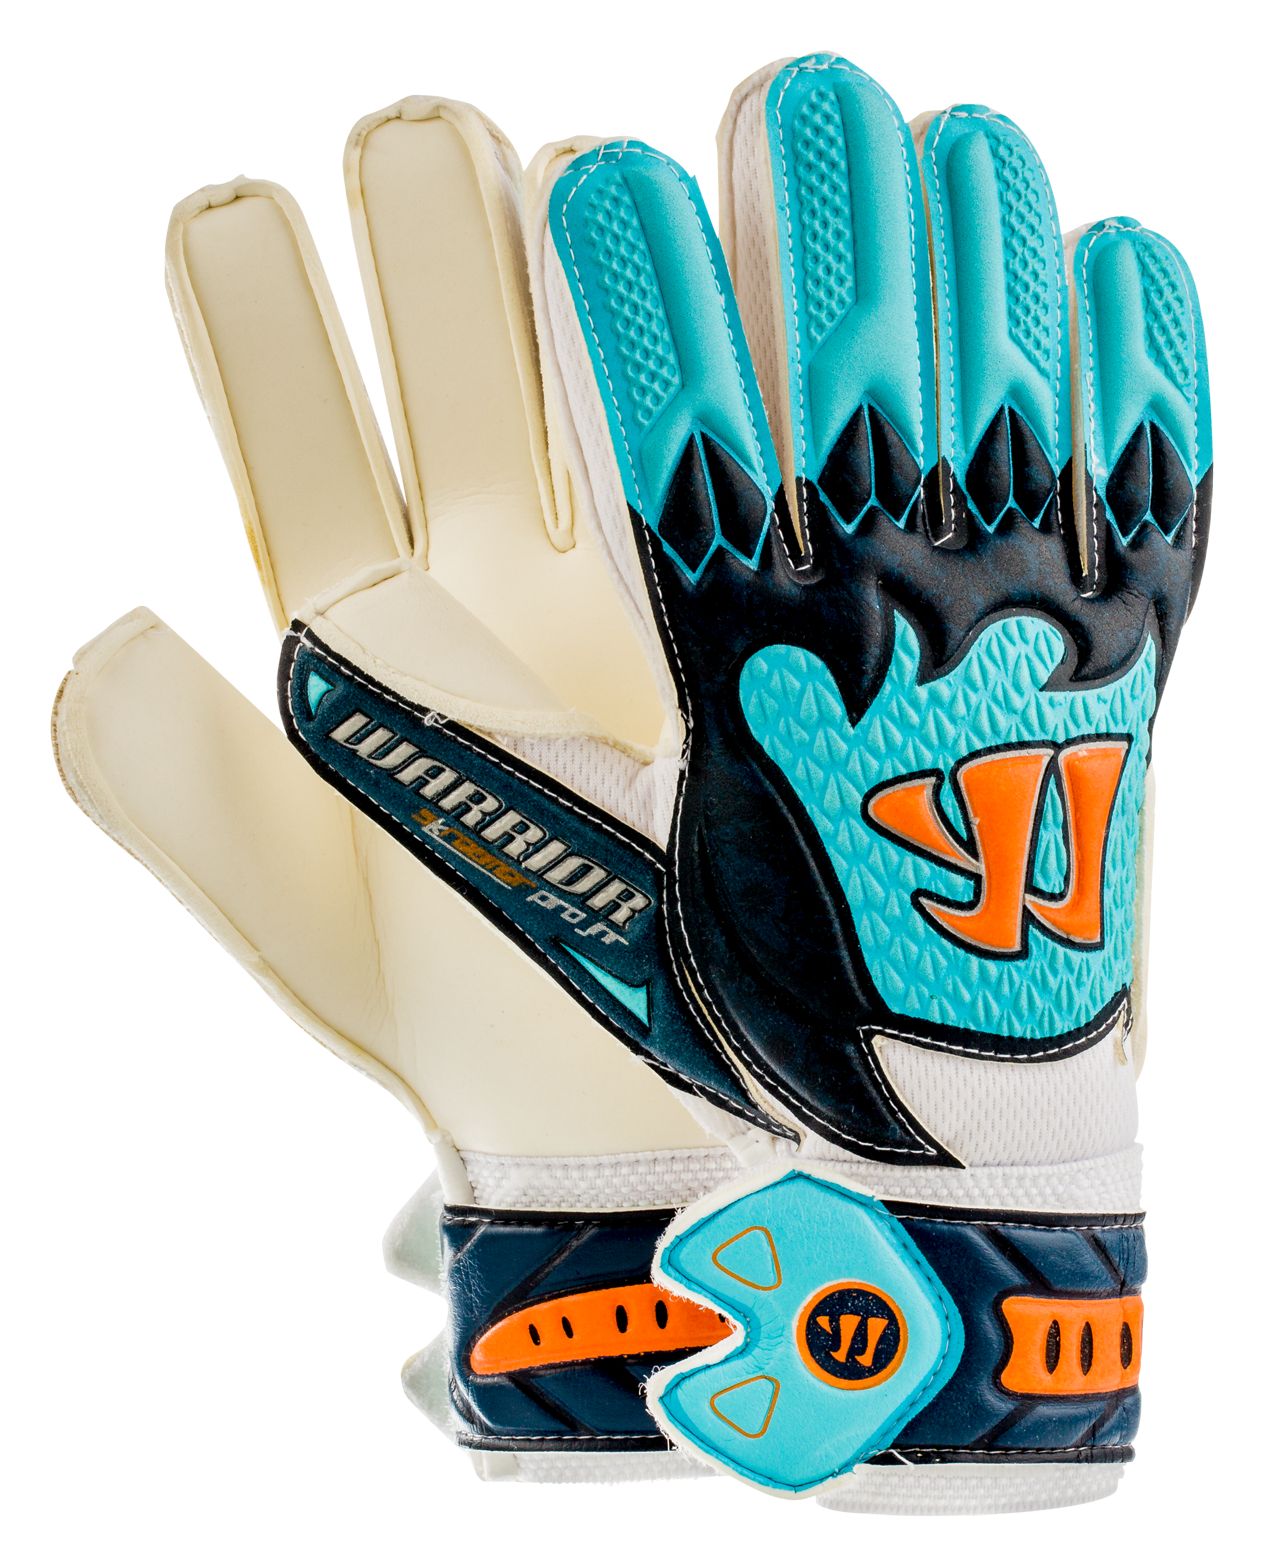 Skreamer Pro Junior Goalkeeper Gloves, White with Blue Radiance & Insignia Blue image number 1